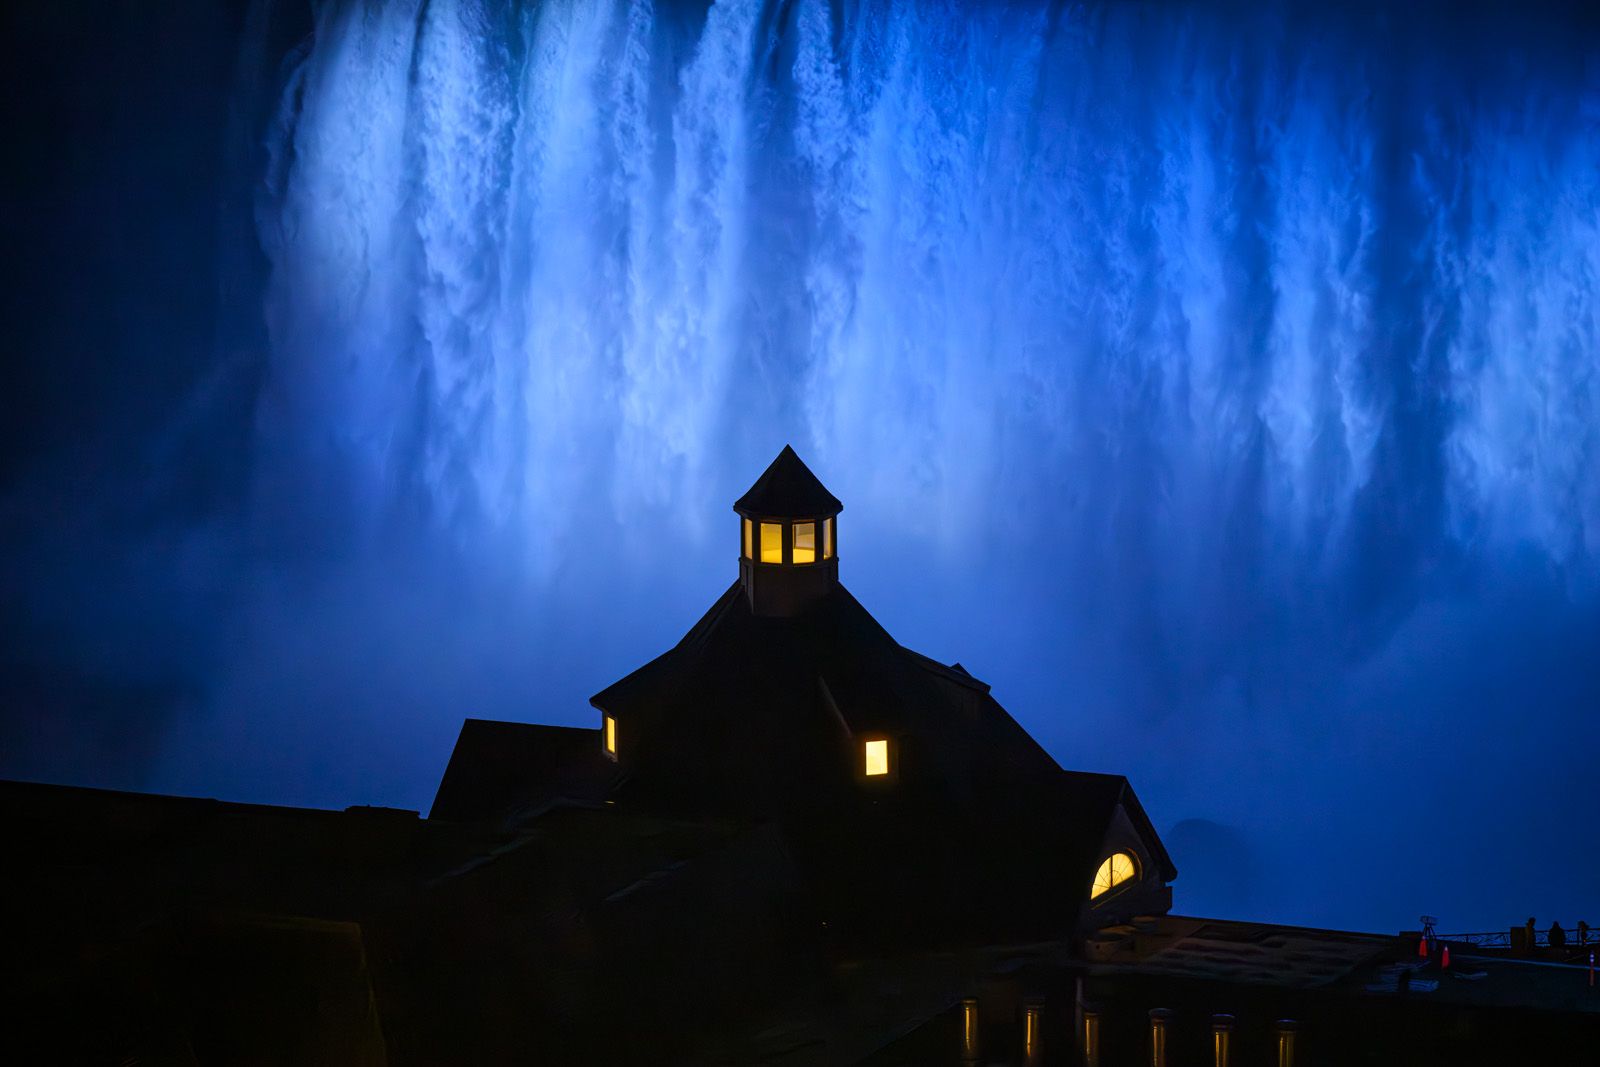 Table Rock at night lit by Niagara Falls under blue lights